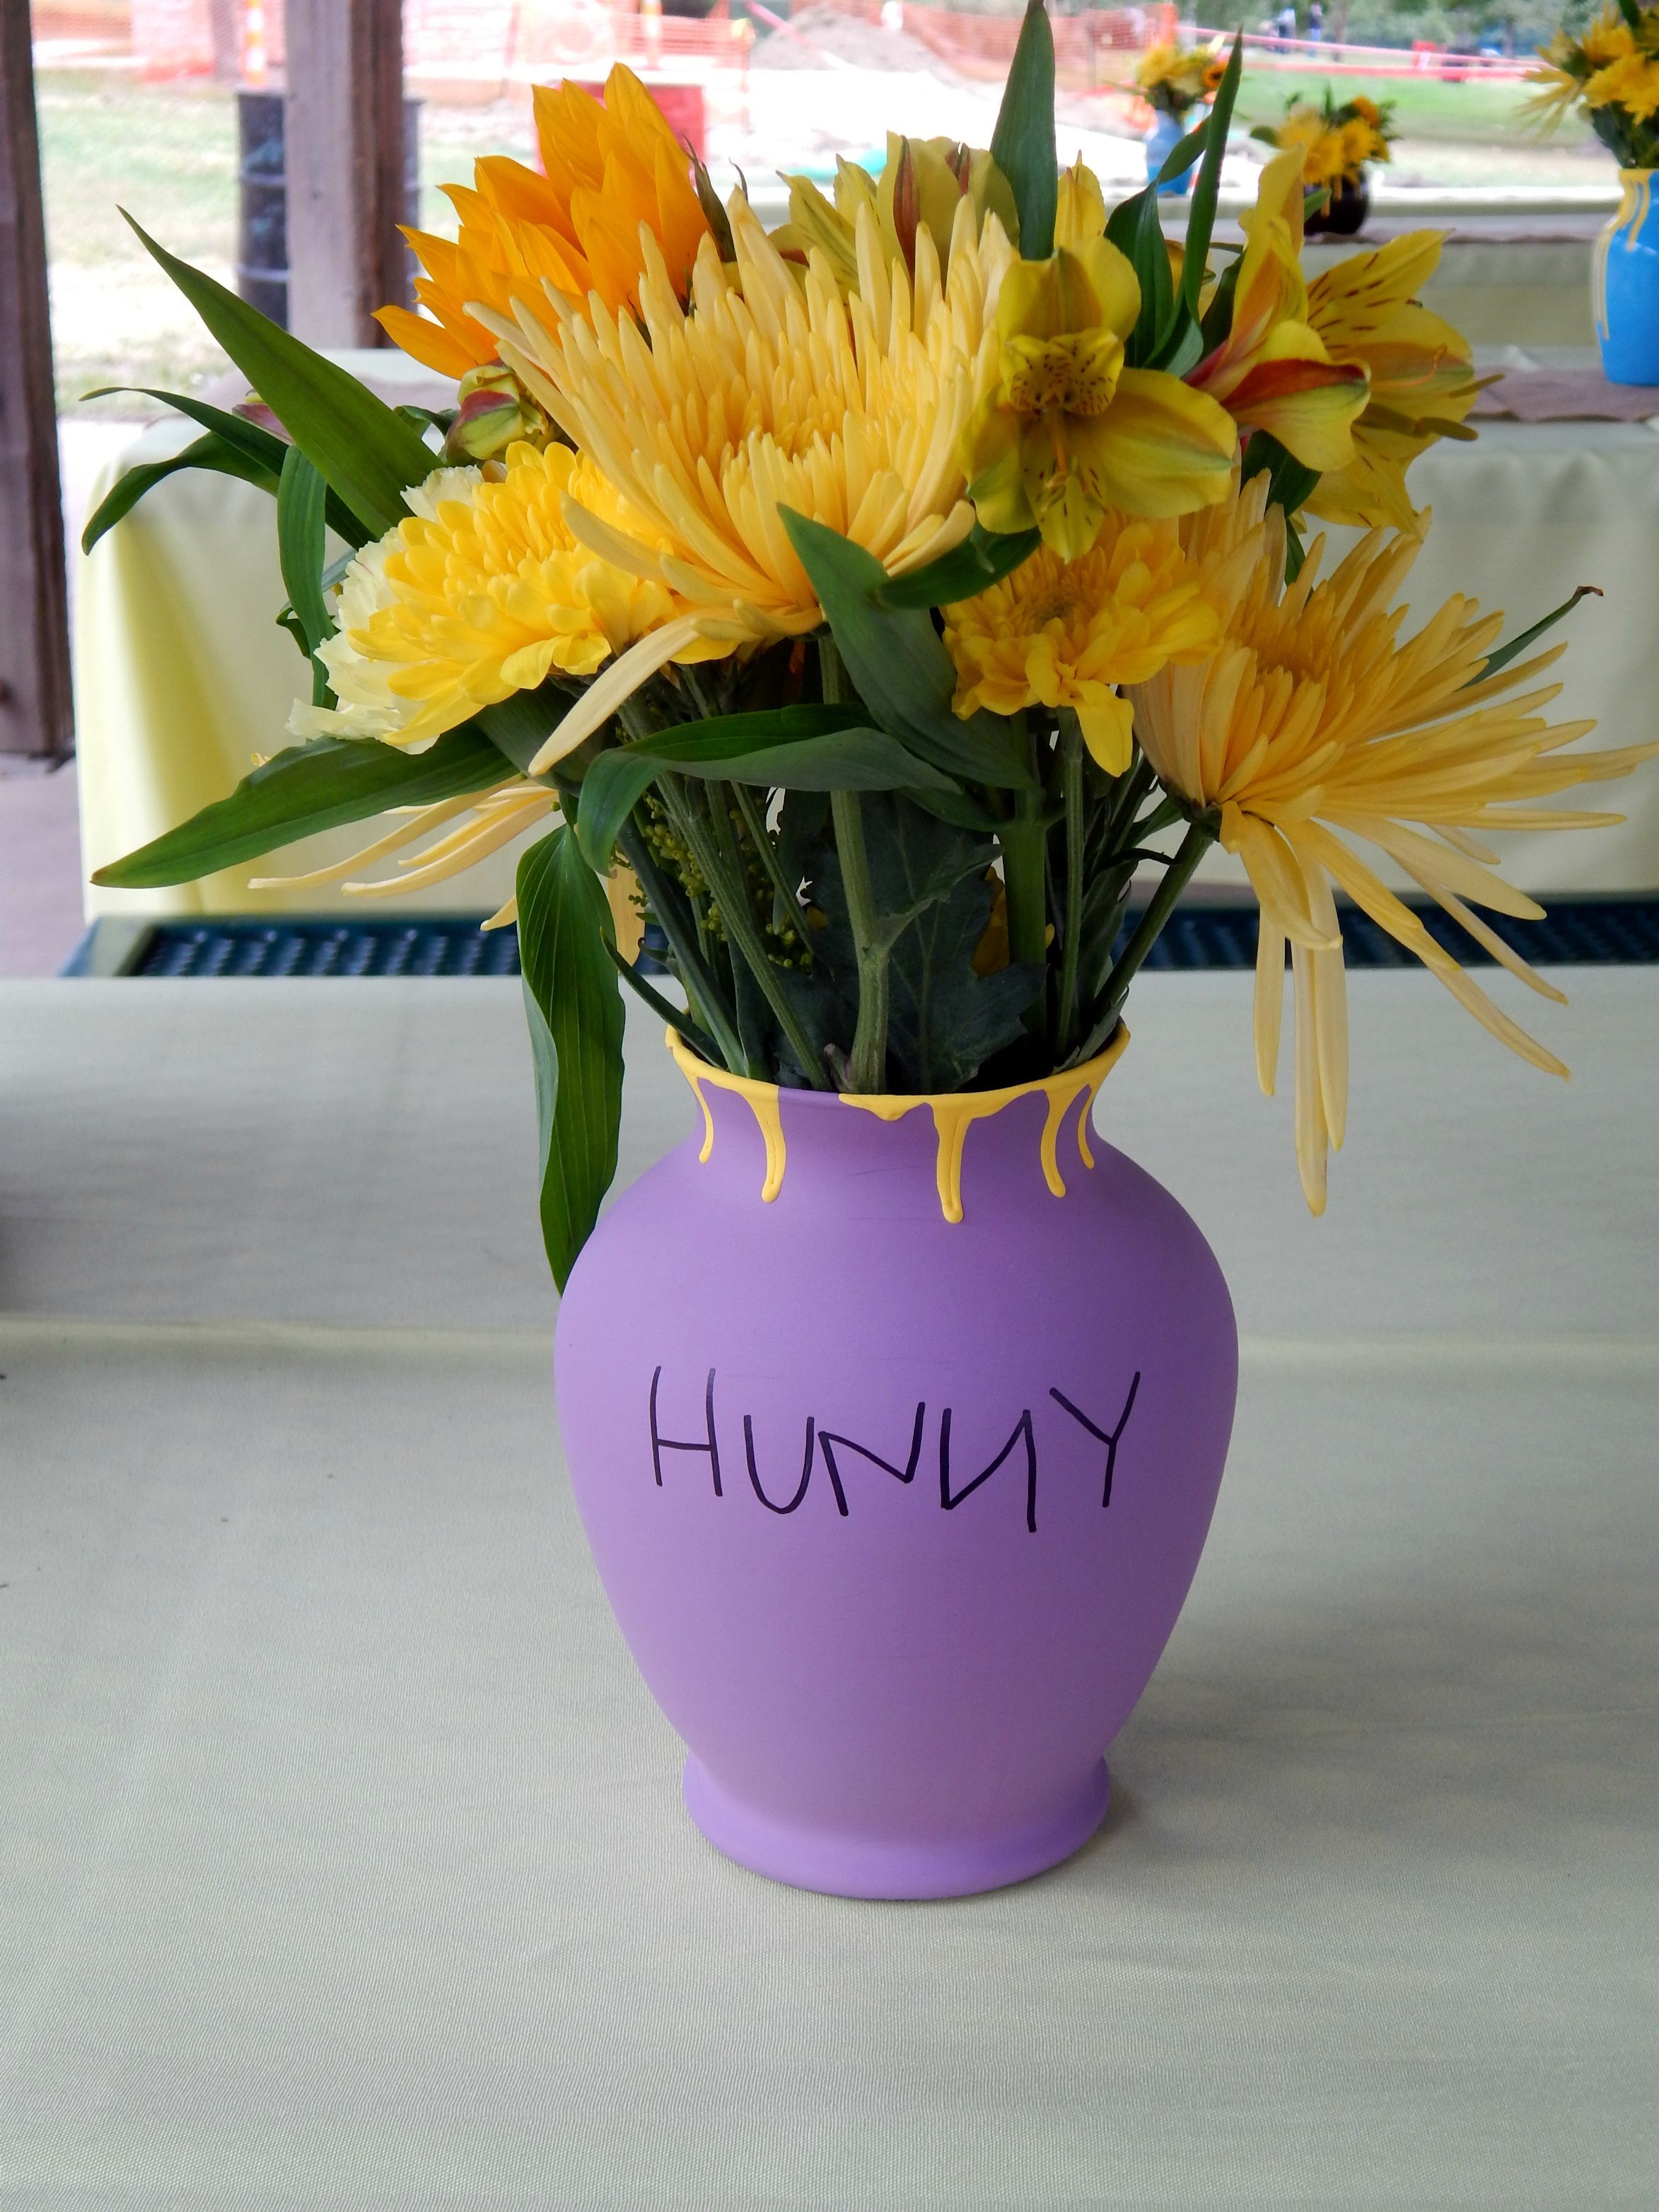 hunny pot centerpiece yellow flowers vase winnie the pooh honey #disney_crafts_wood